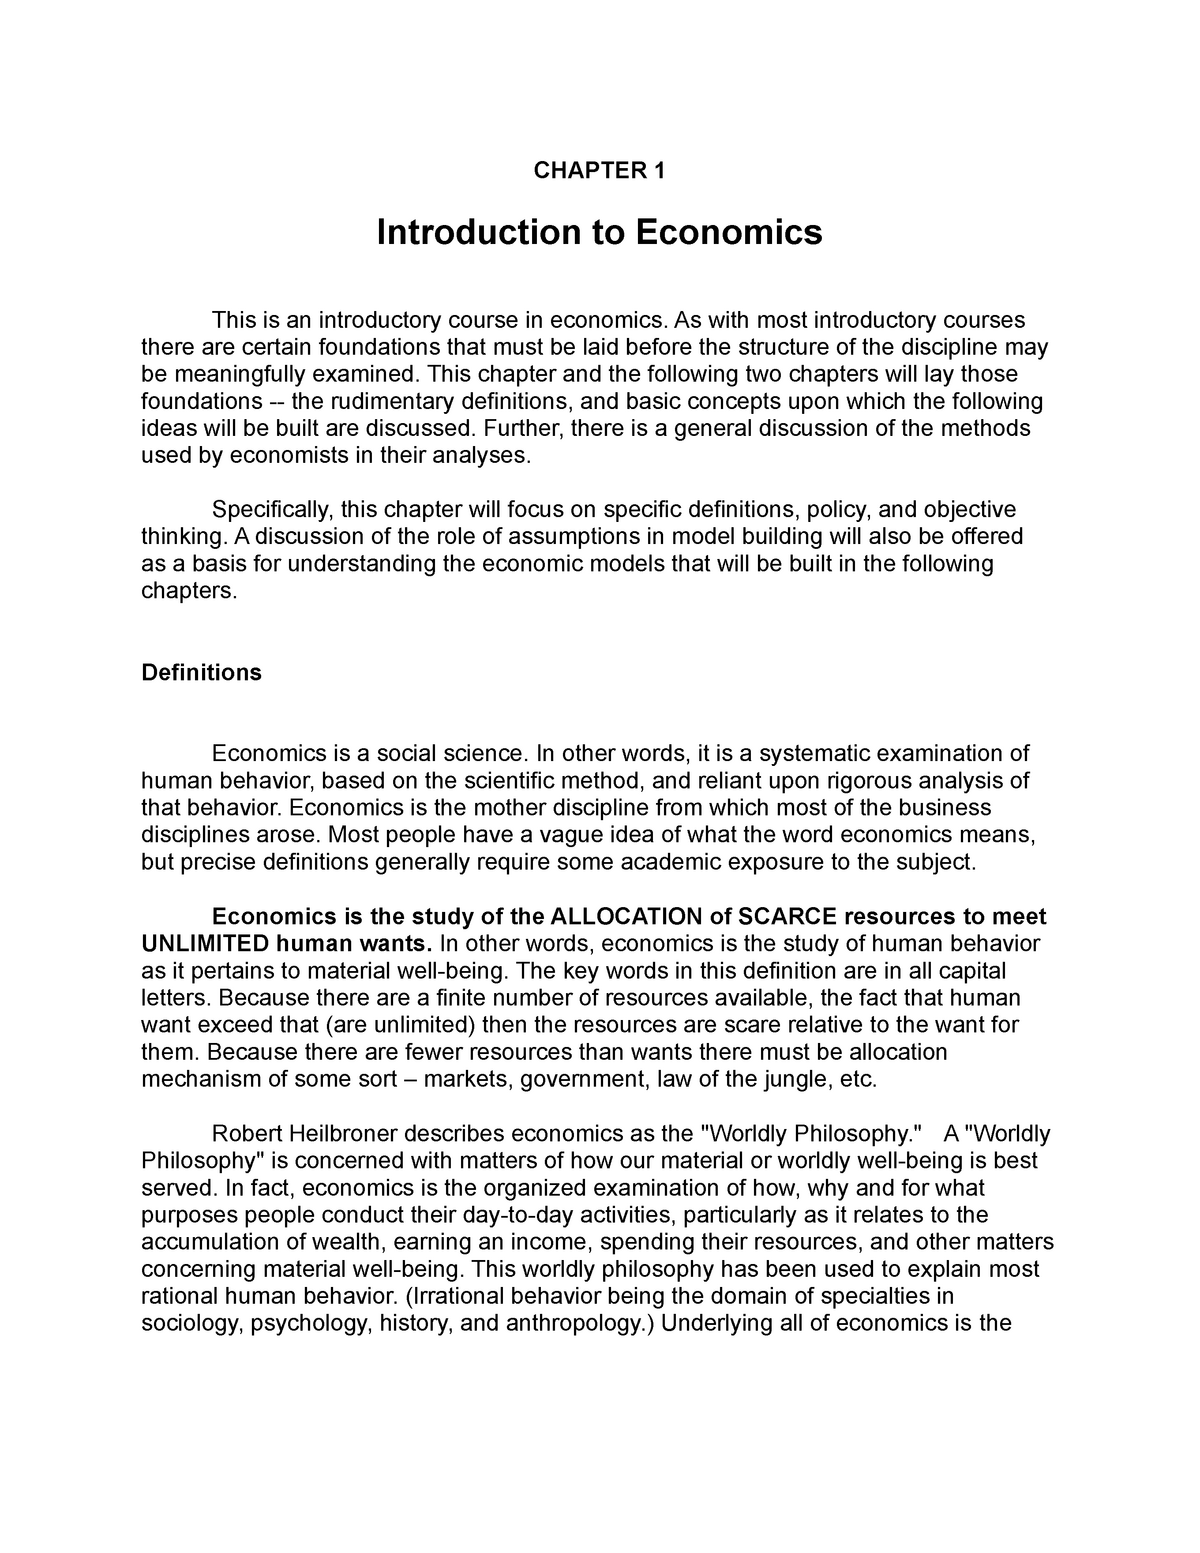 essay definition of economics